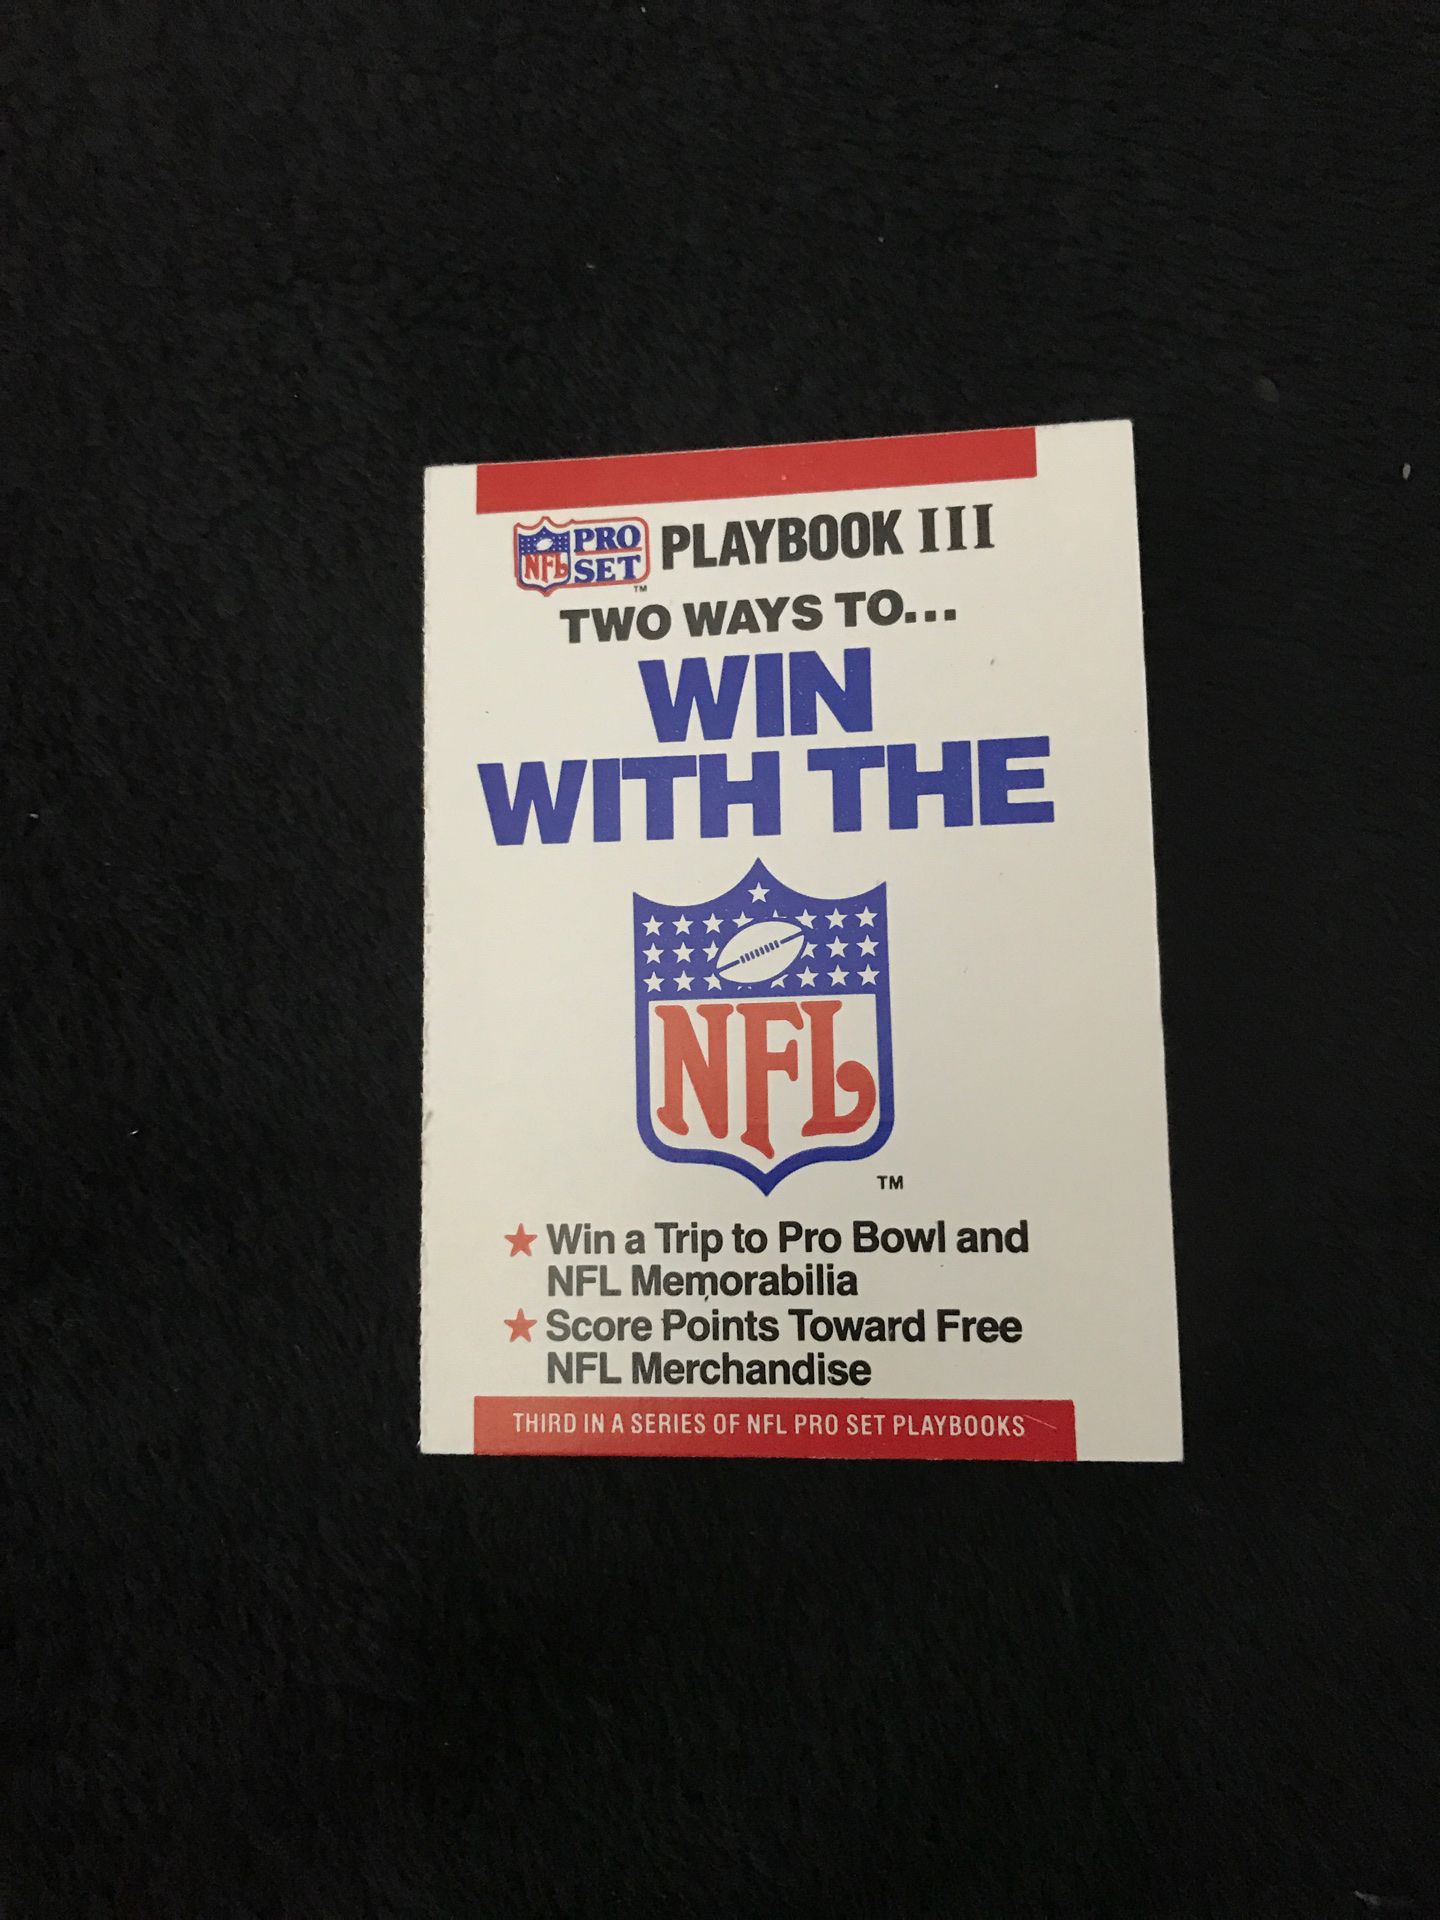 NFL card